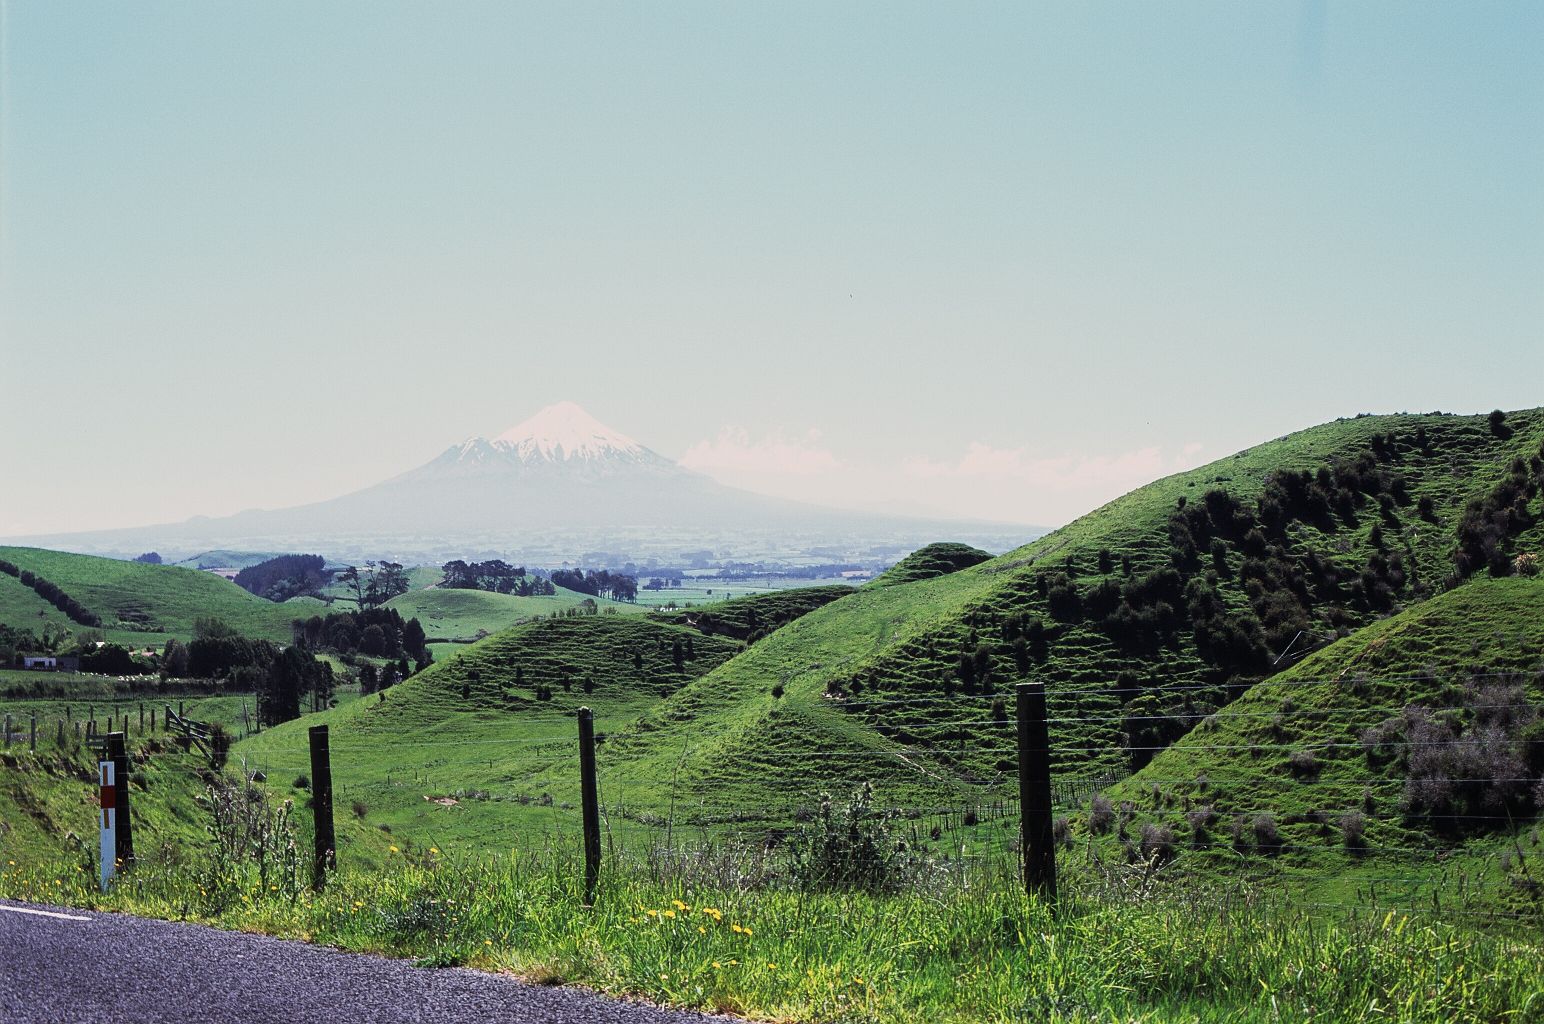 fotka / image Mt. Taranaki, z Aucklandu do Wellingtonu